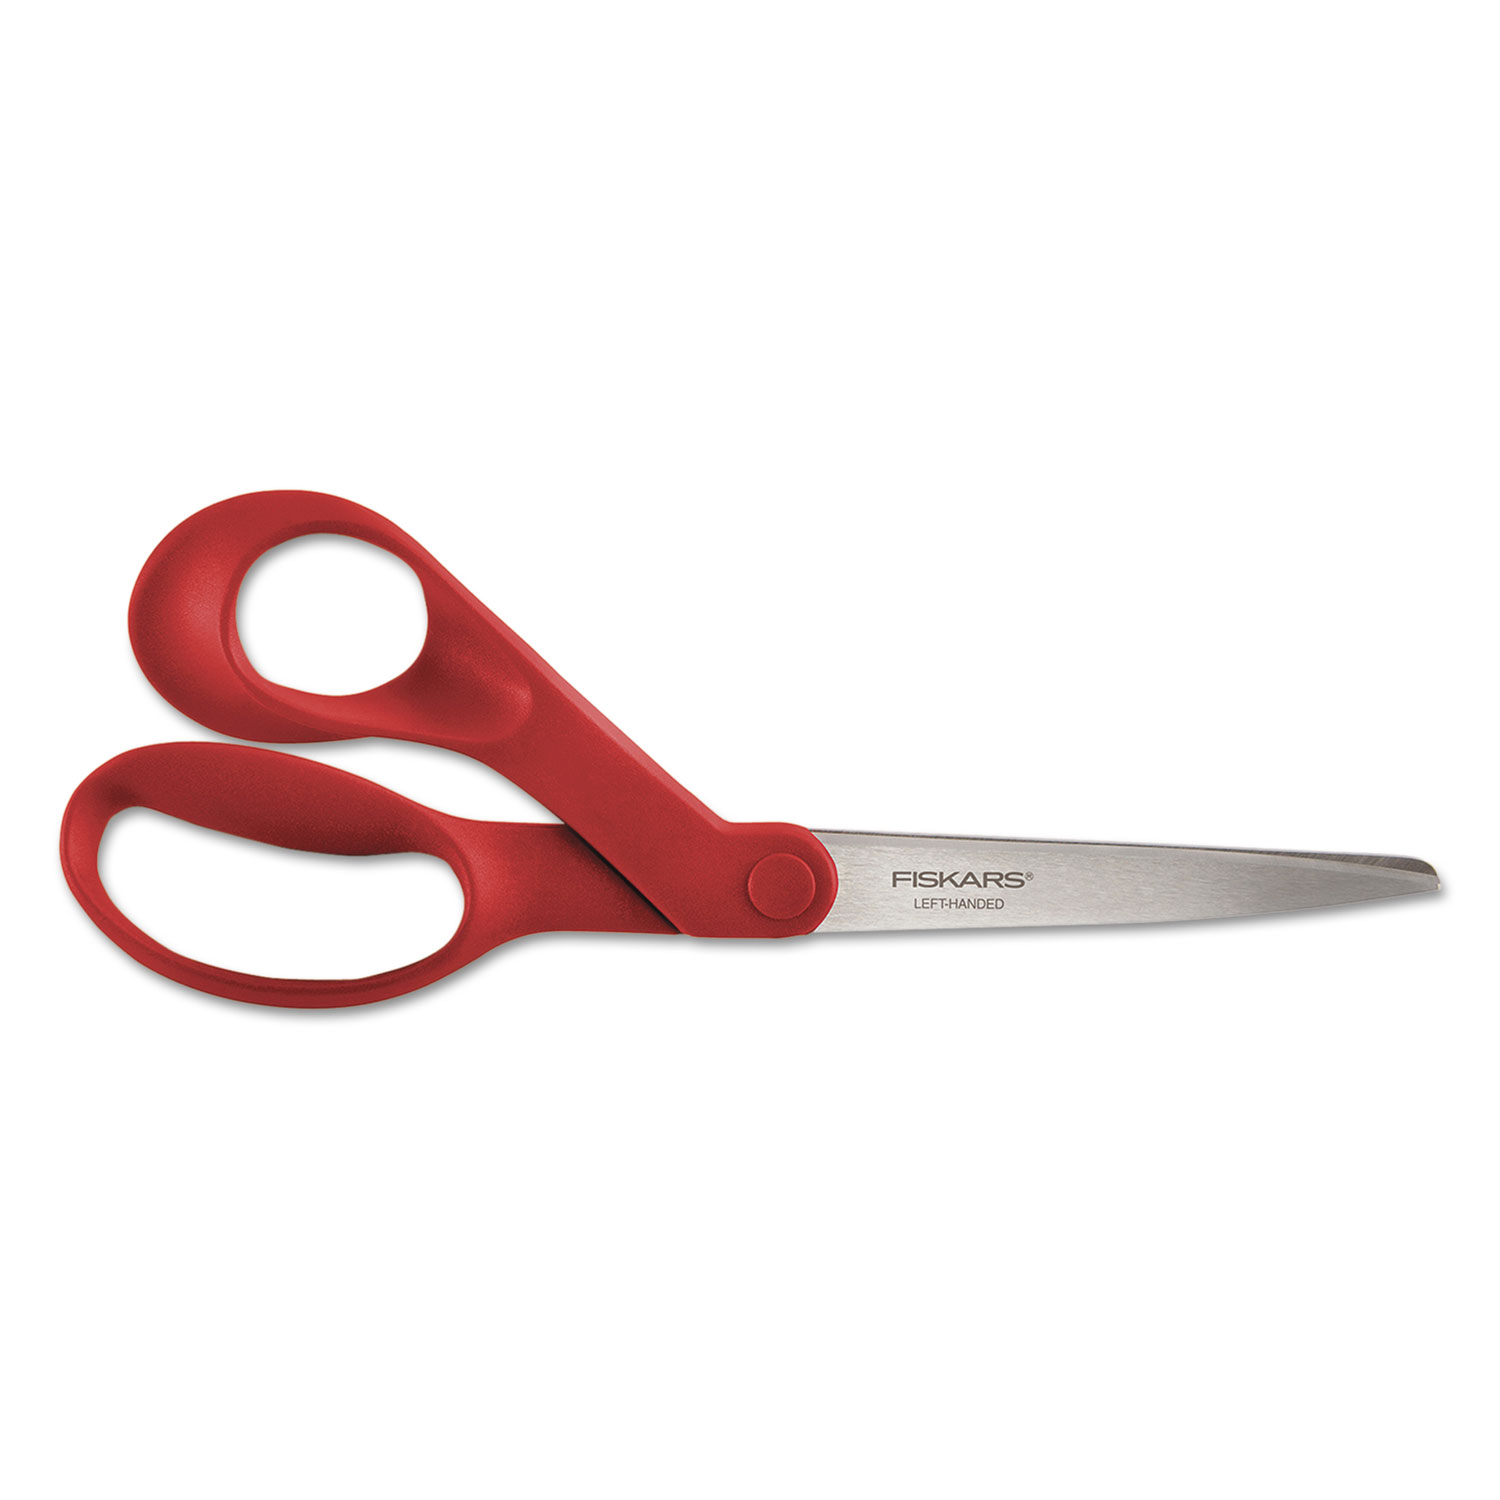  Fiskars 12-94508697WJ Our Finest Left-Hand Scissors, 8 Long, 3.3 Cut Length, Red Offset Handle (FSK1945001001) 